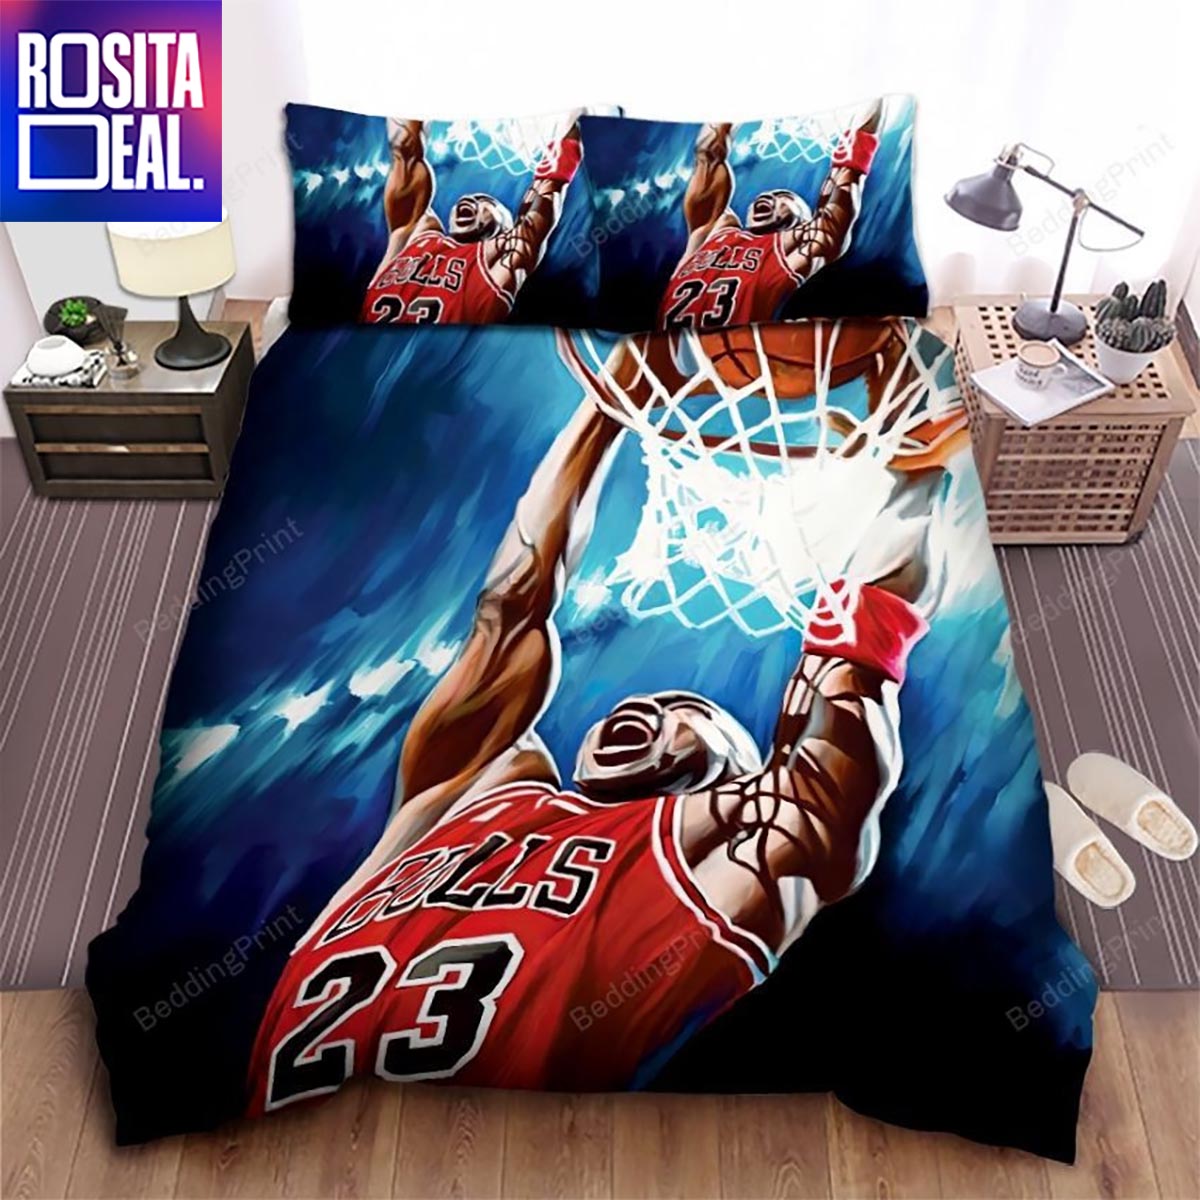 Chicago Bulls Michael Jordan Powerful Dunk Illustration Bedding Set ...